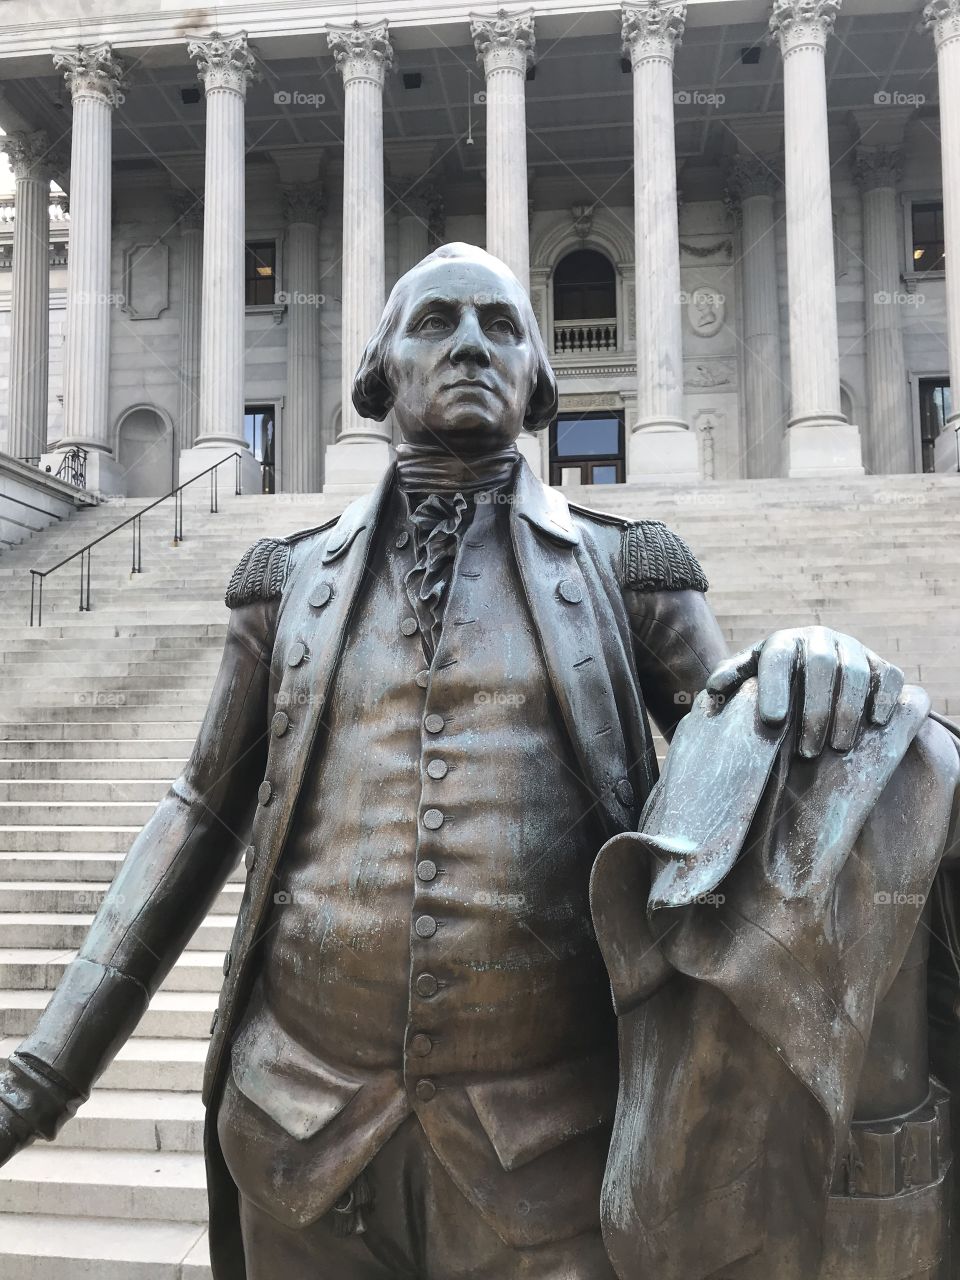 George Washington statue at the SC statehouse